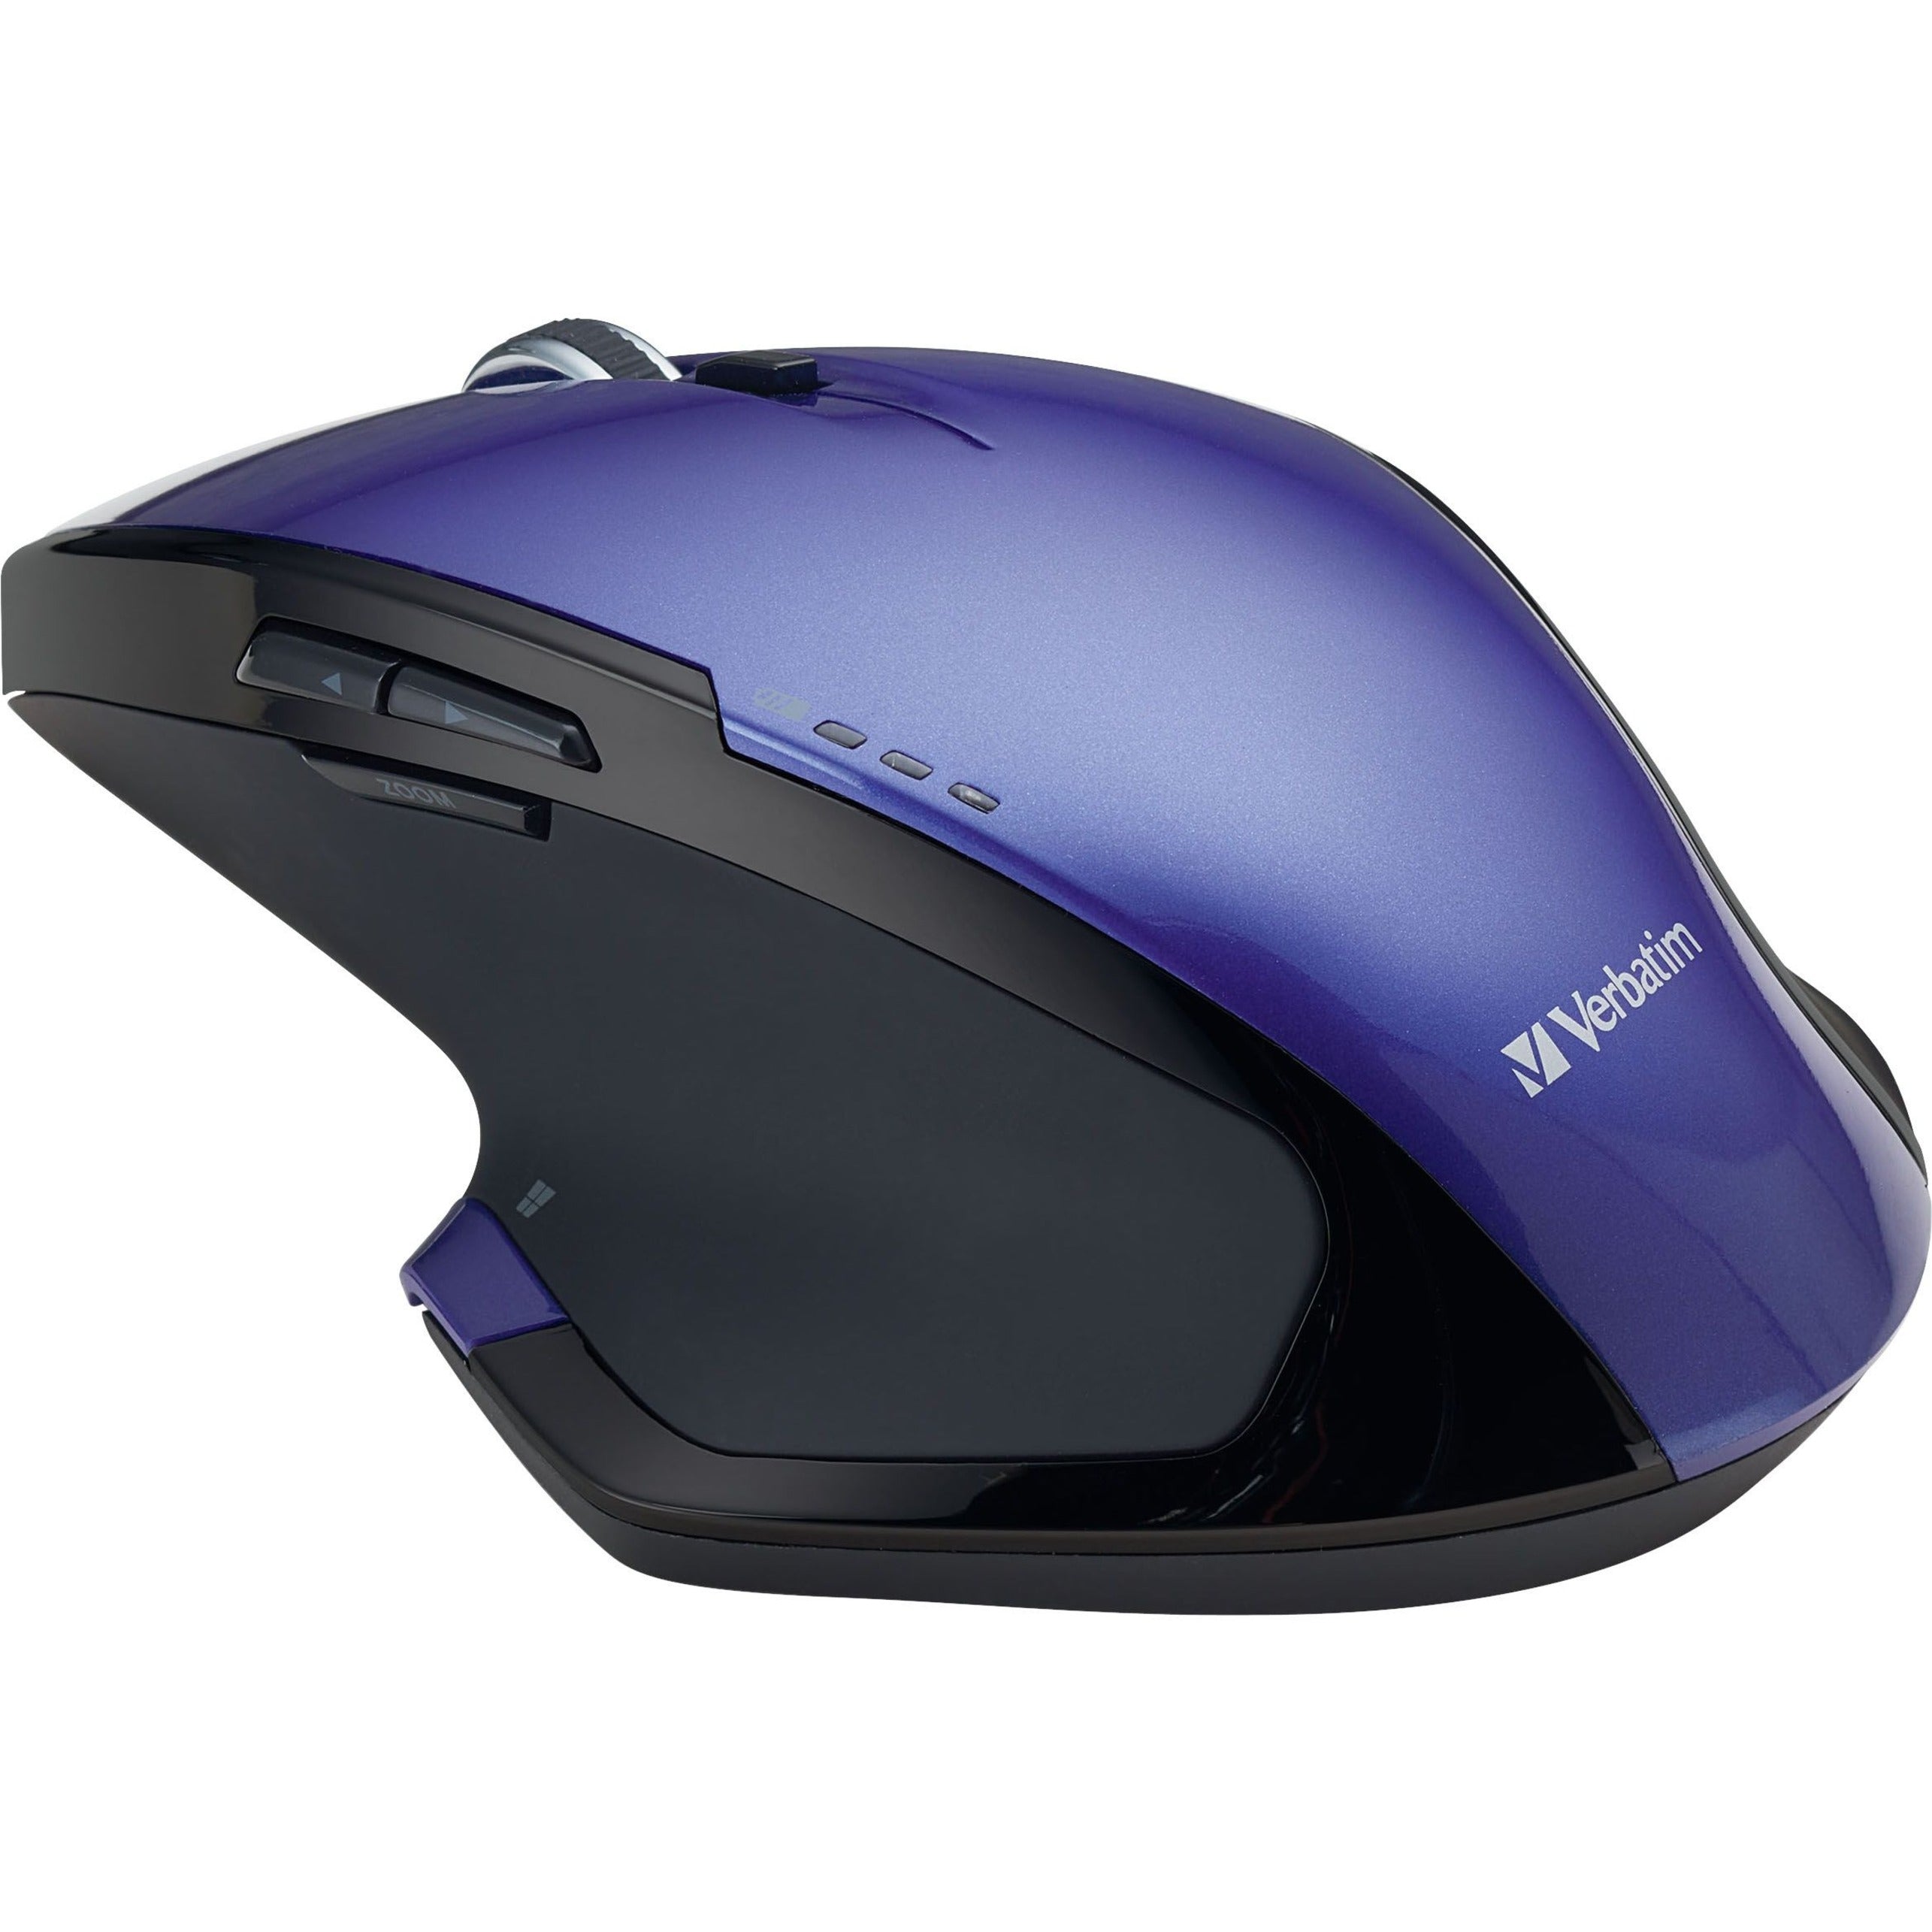 Verbatim 99020 Wireless Desktop 8-Button Deluxe Blue LED Mouse - Purple, Radio Frequency, Scroll Wheel, 1600 dpi